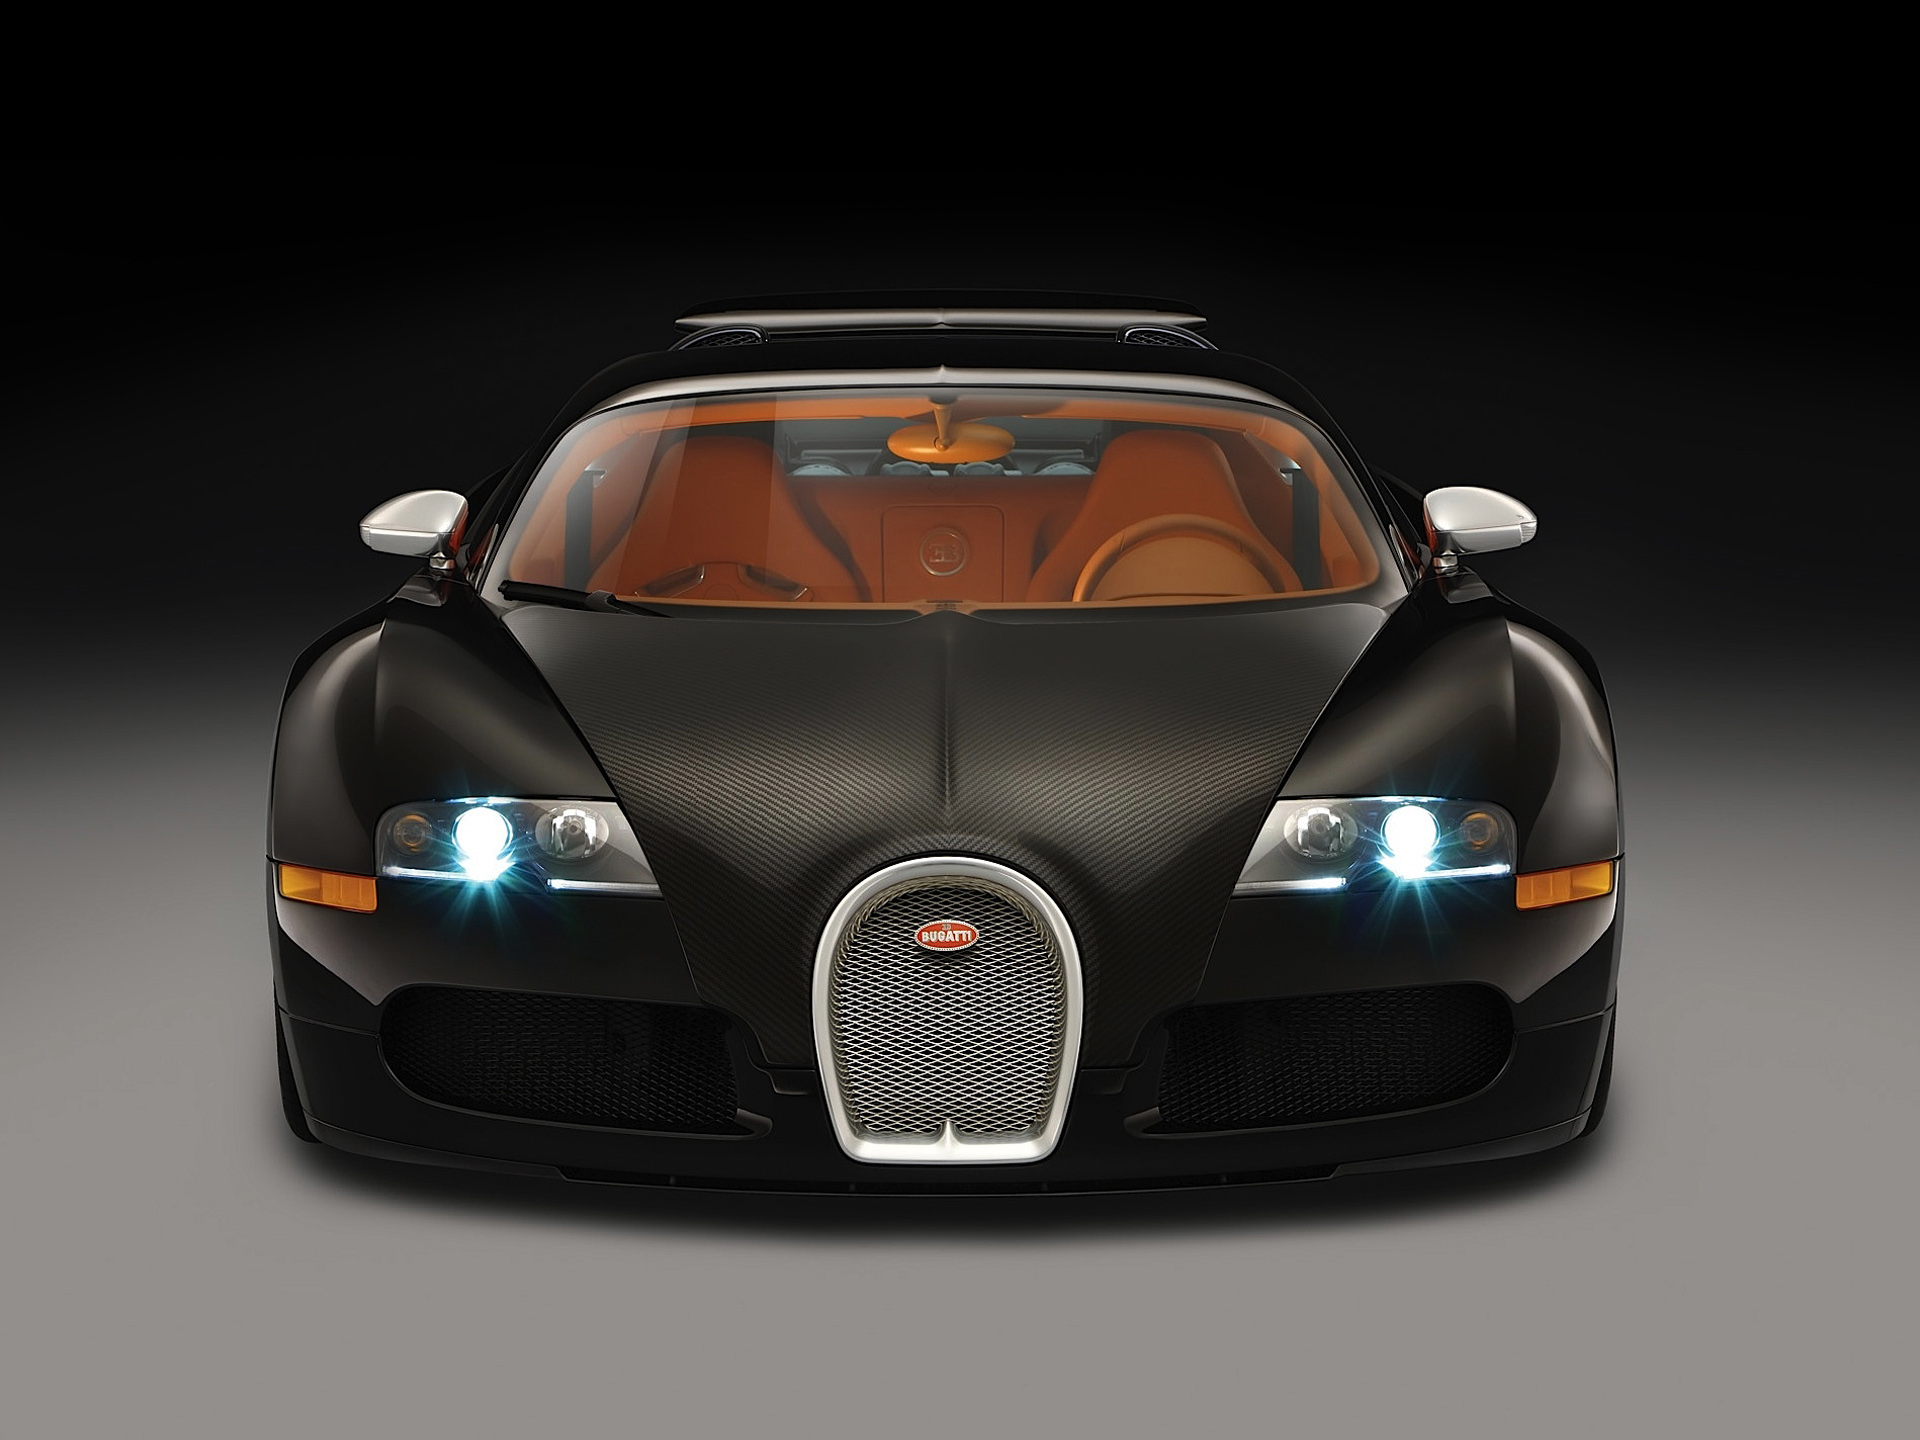 Bugatti Veyron Wallpaper